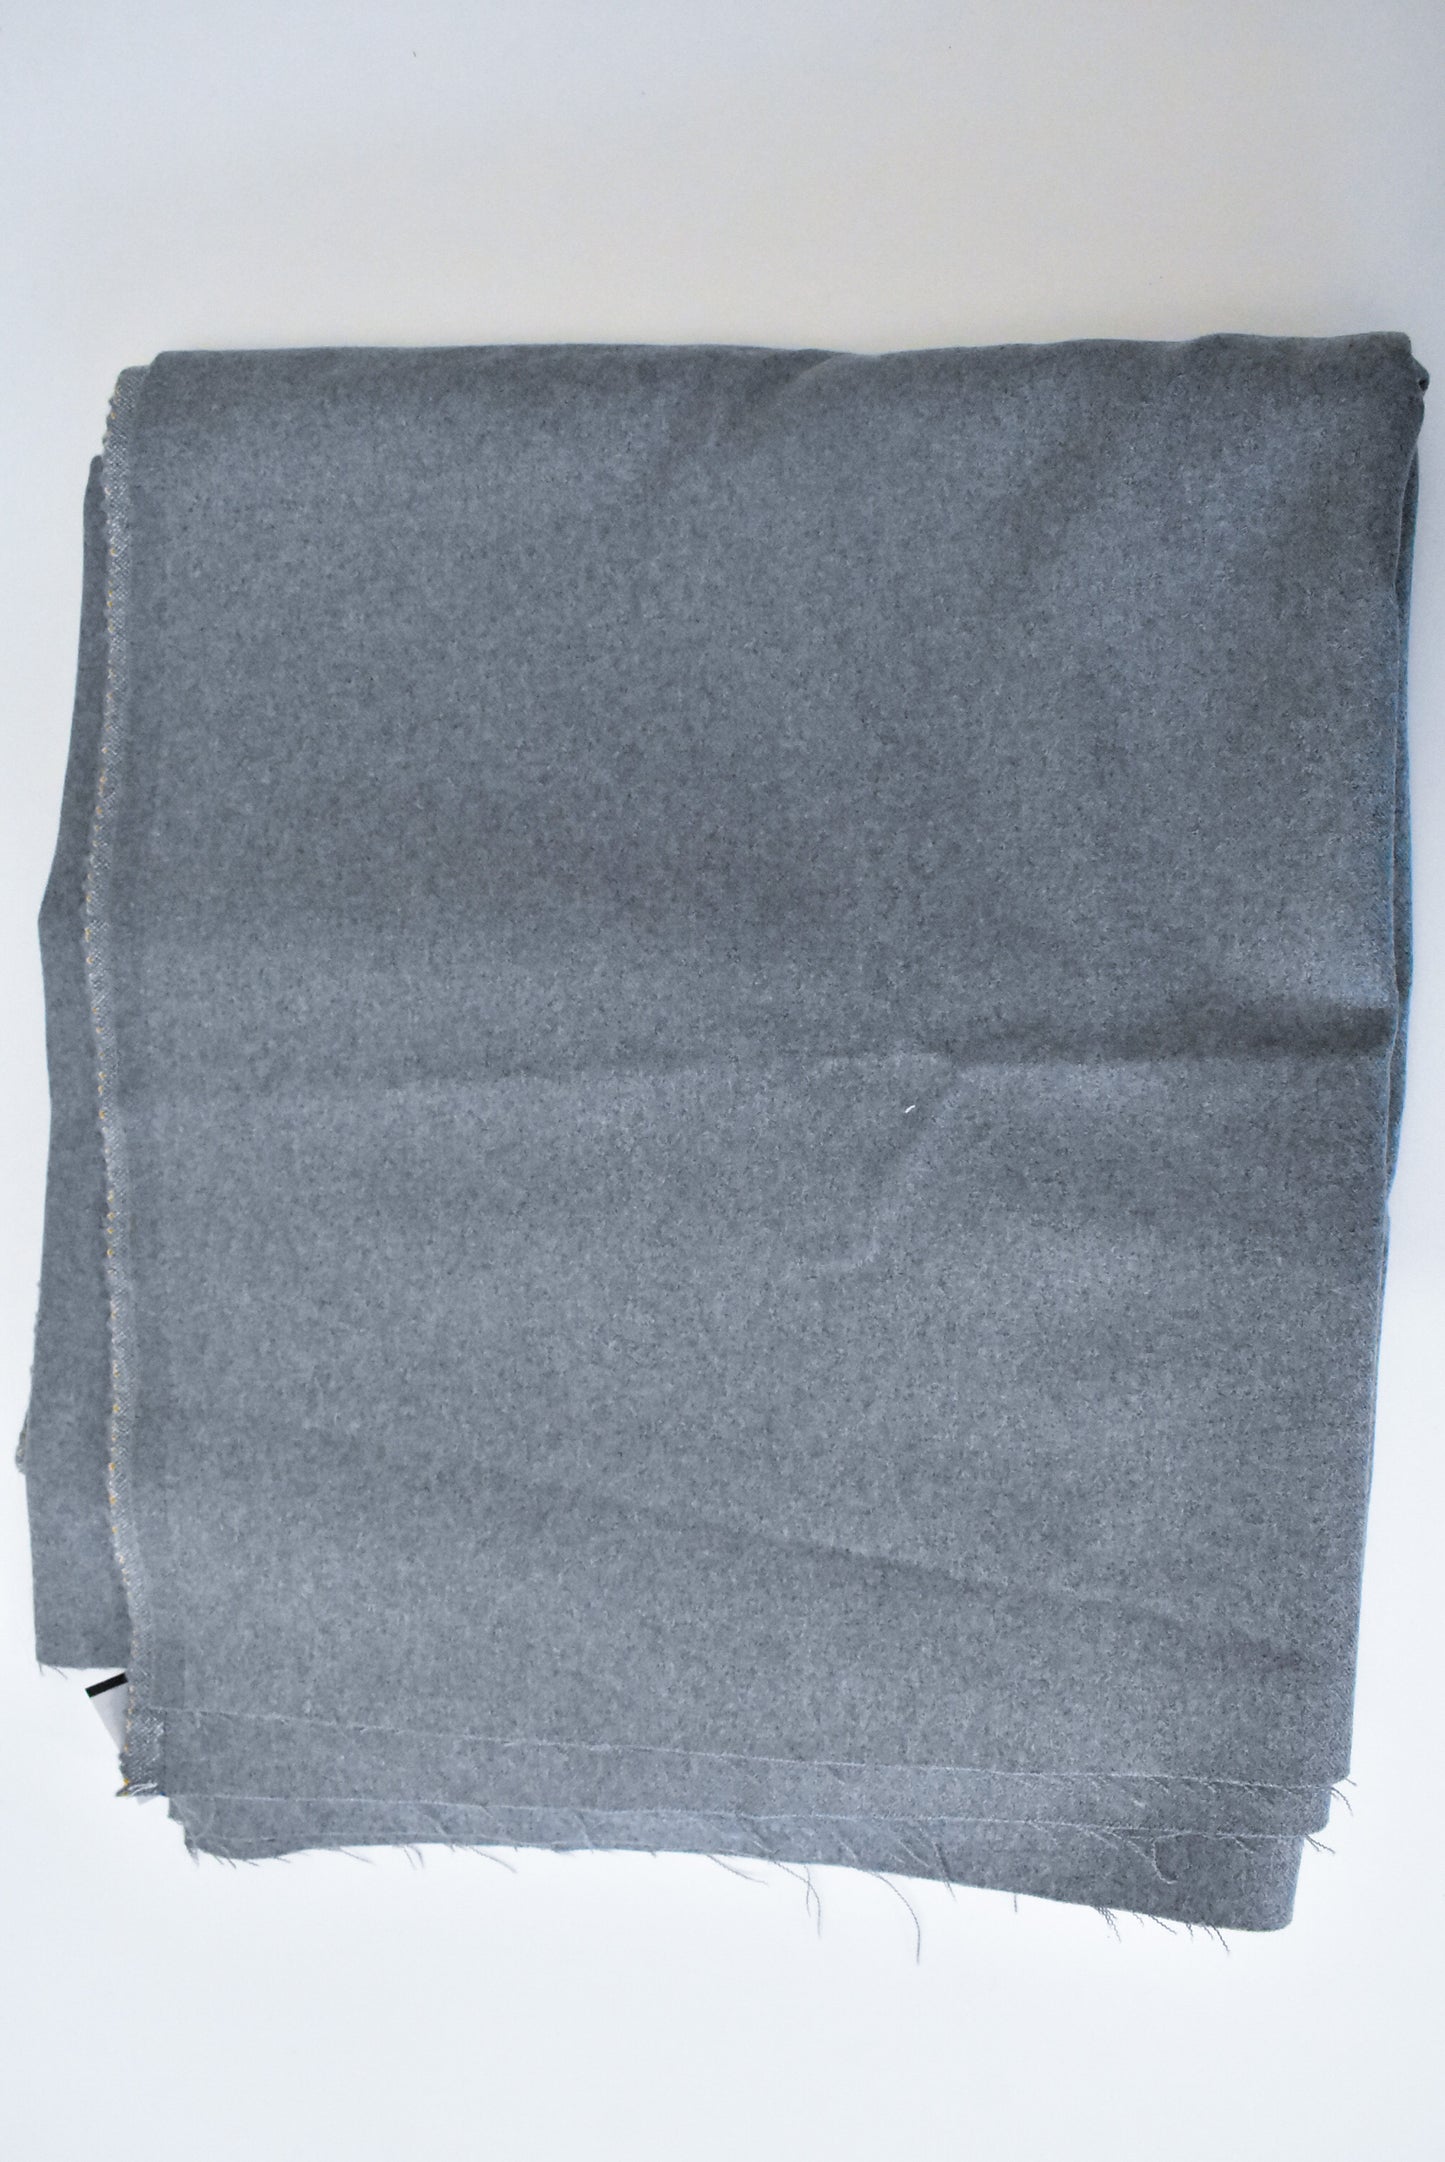 Wool fabric, grey